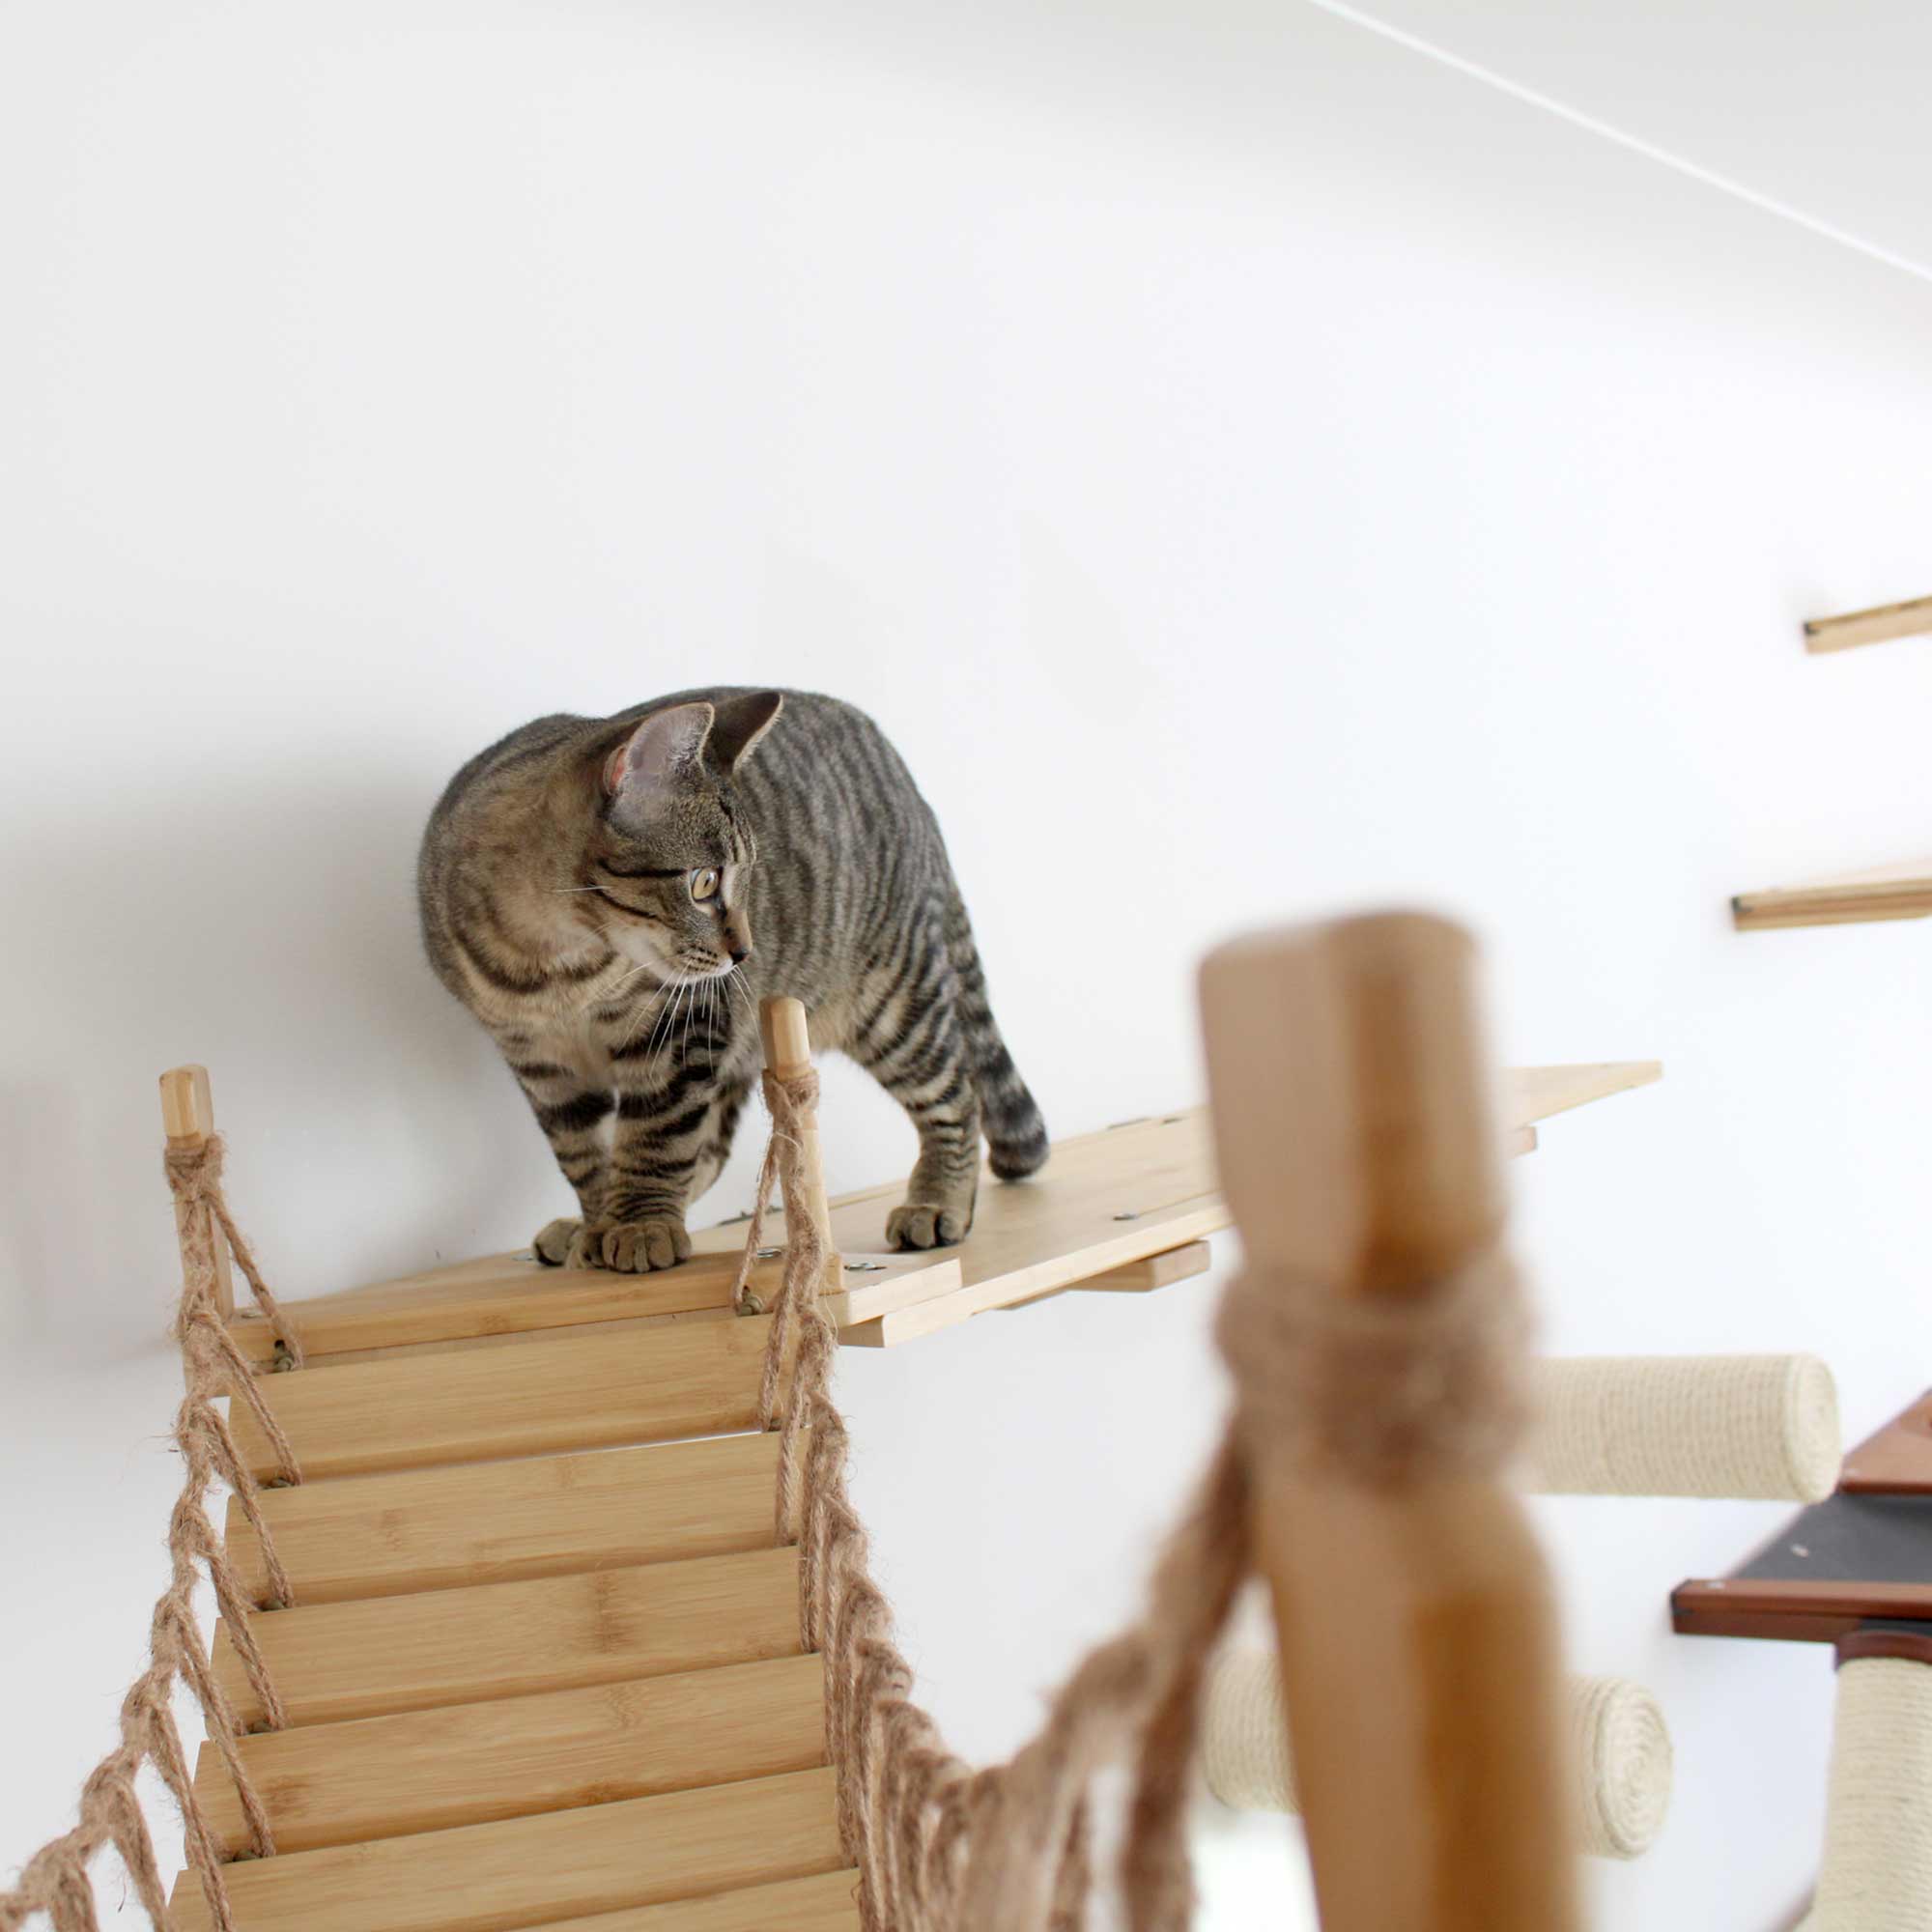 The Corner Cat Bridge by Catastrophic Creations